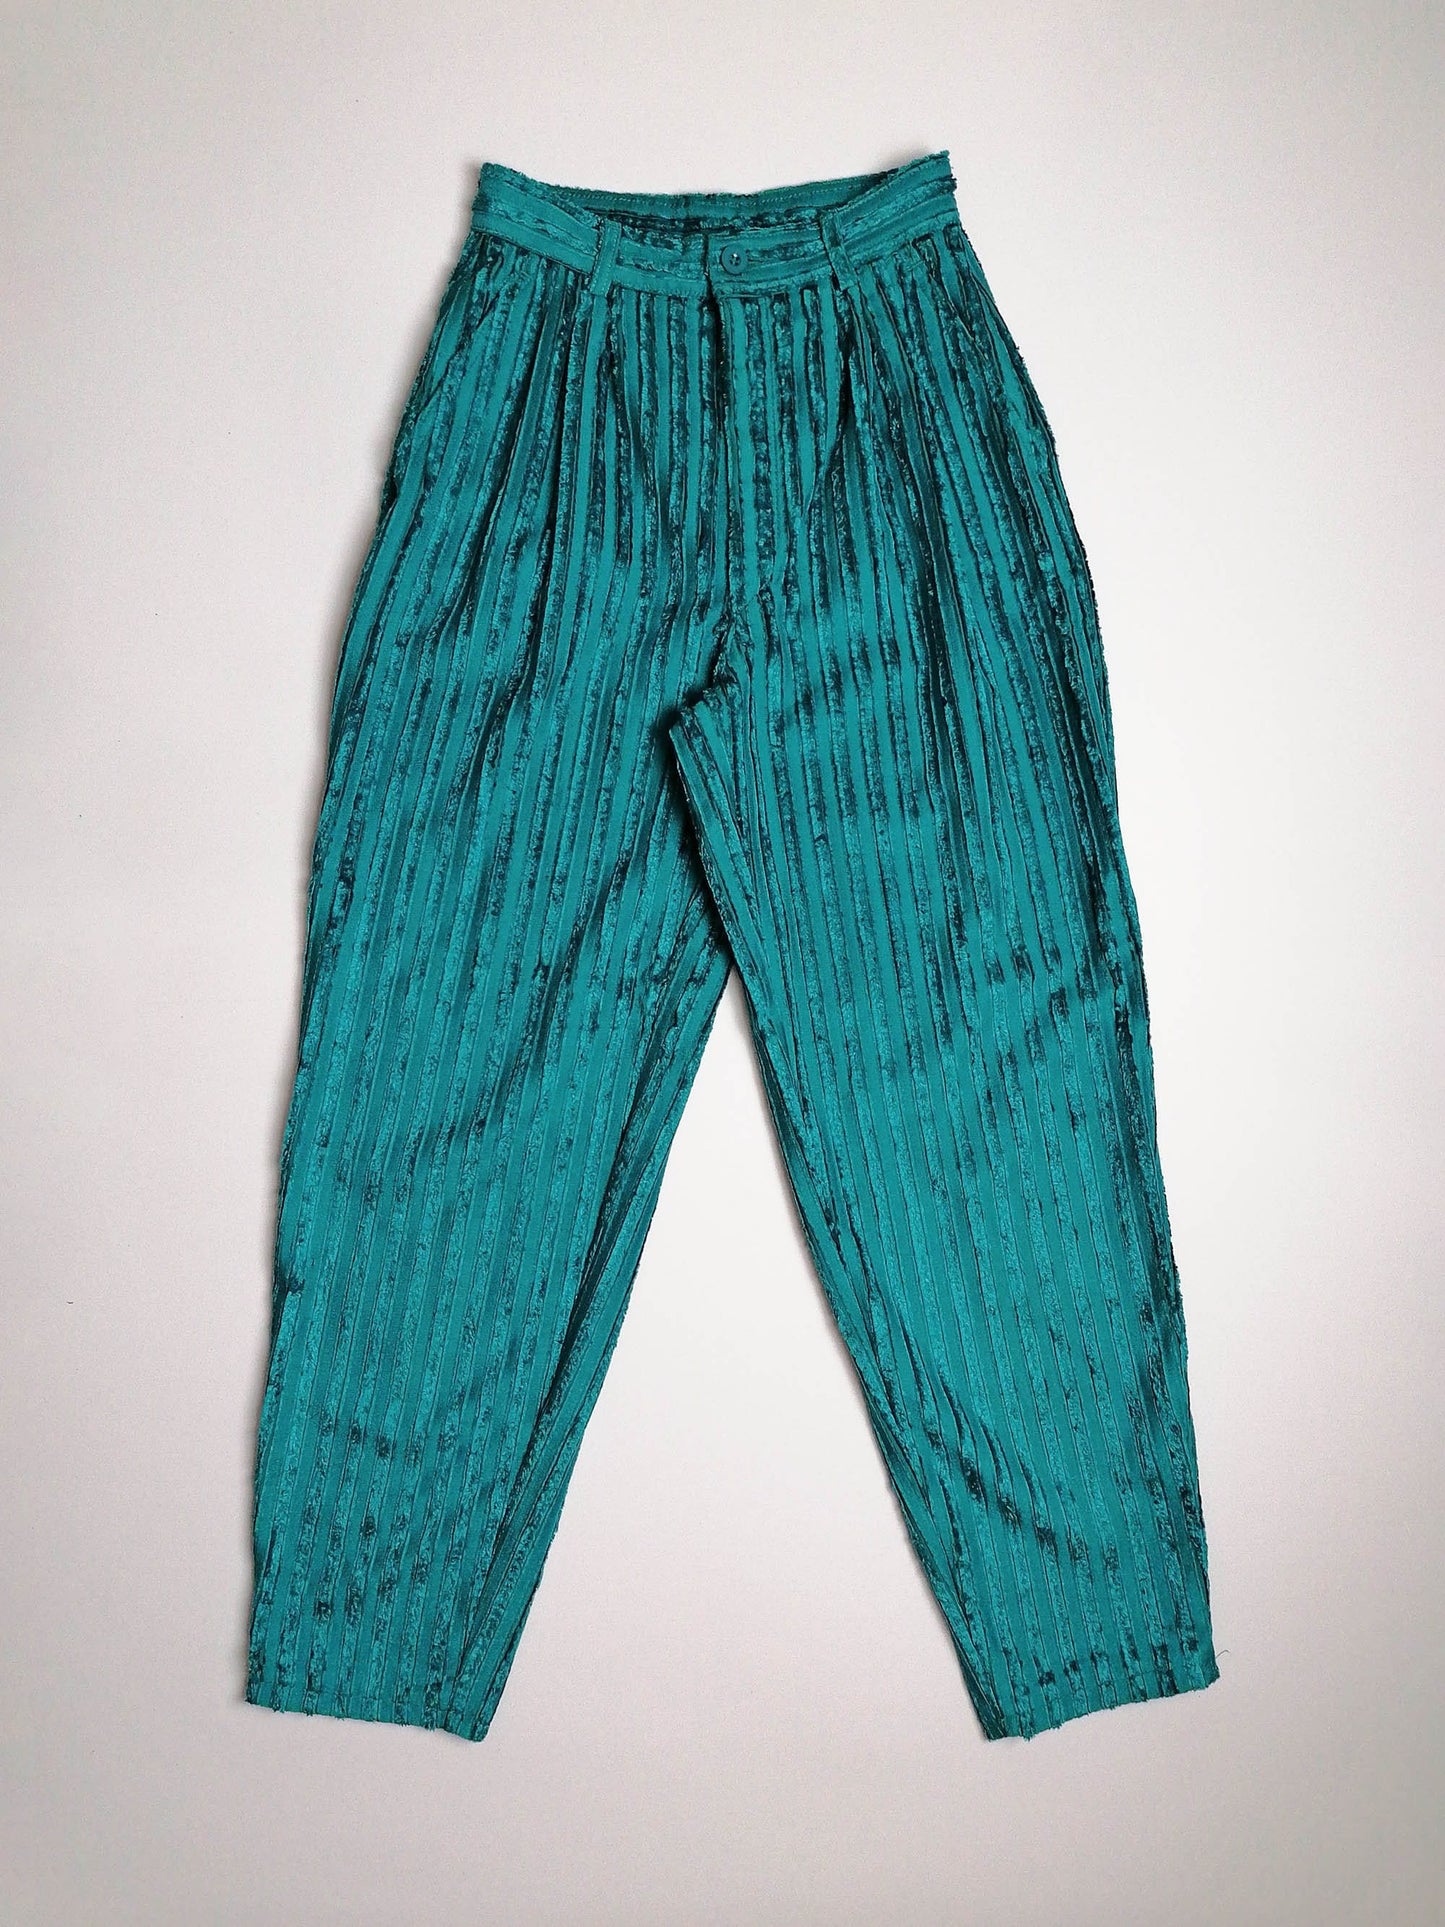 80's High Waist Corduroy Jeans - size XS-S